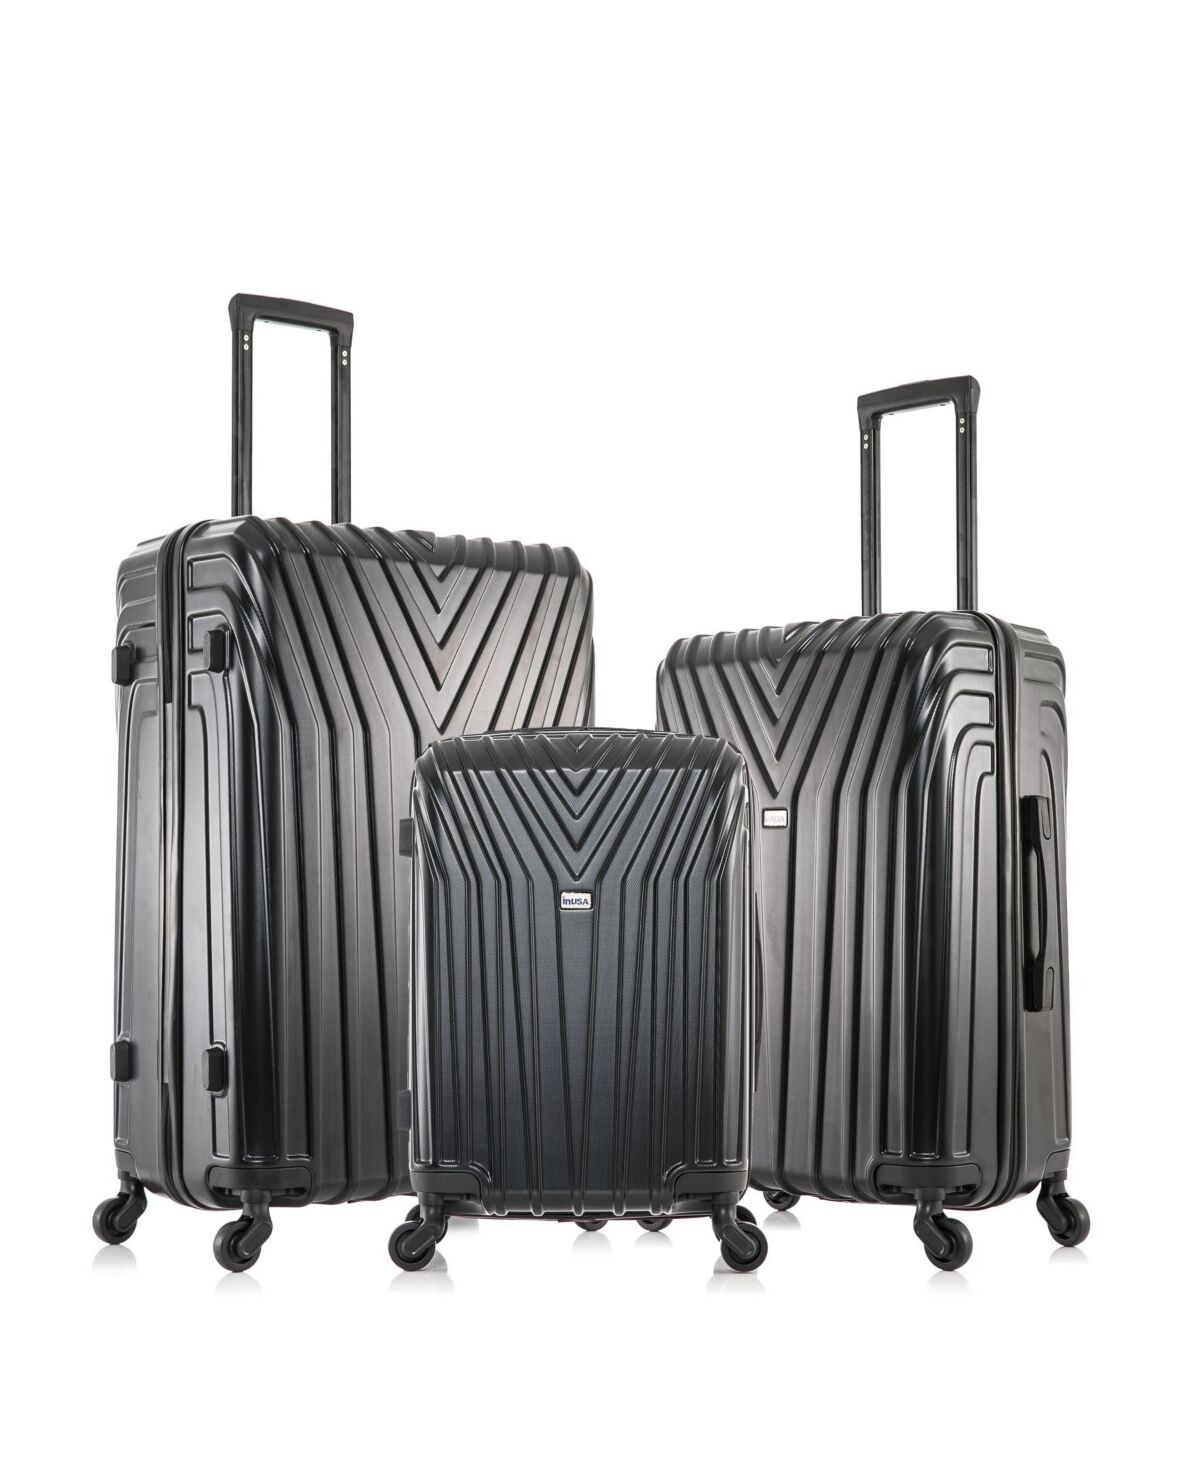 InUSA Vasty Lightweight Hardside Spinner Luggage Set, 3 piece - Black